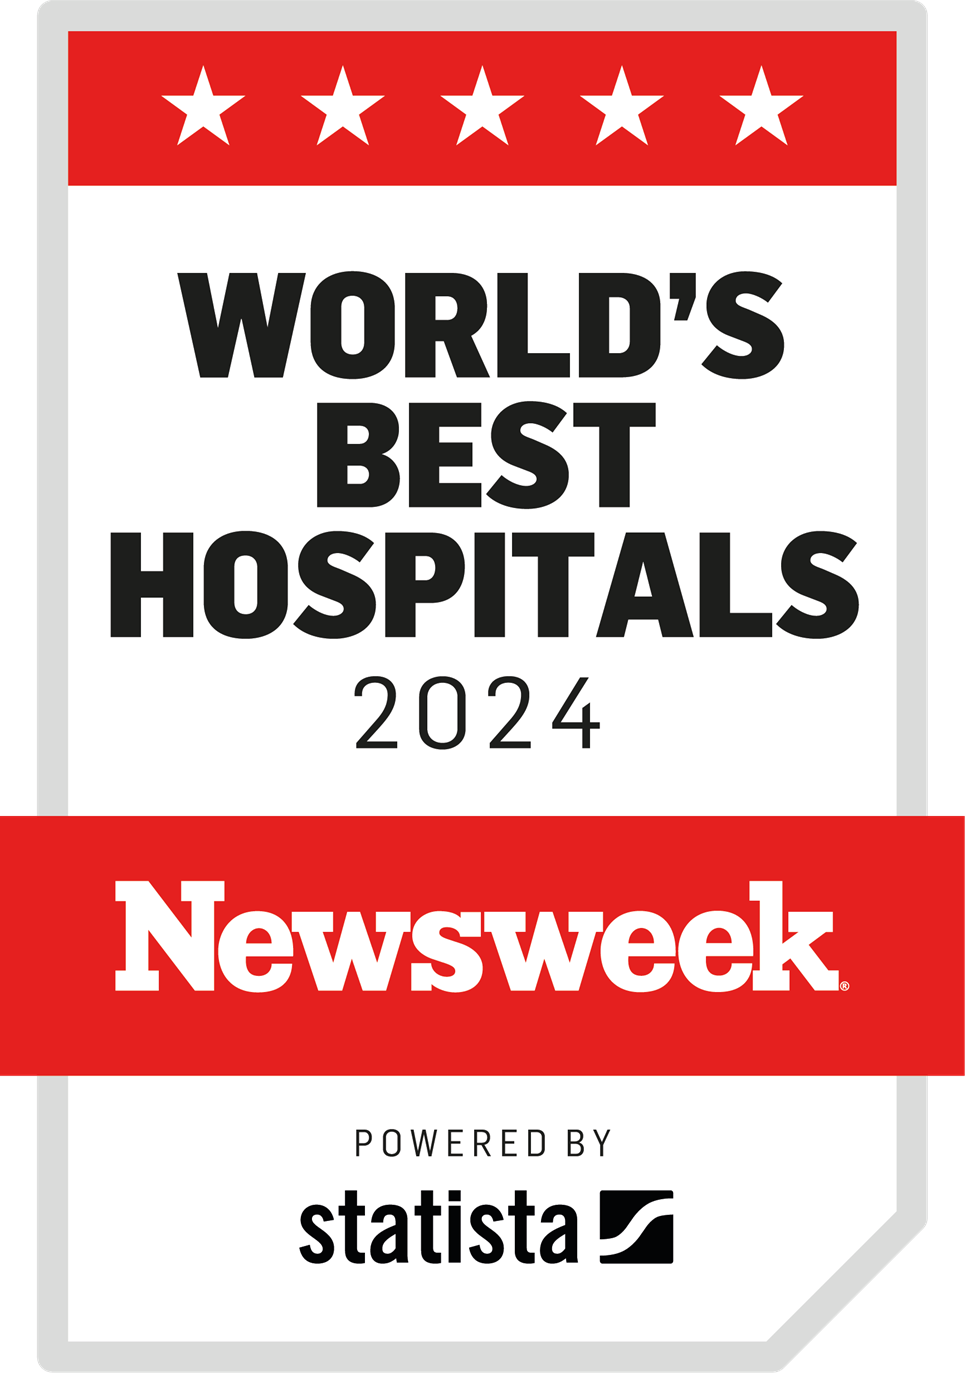 newsweek world's best hospitals 2024 powered by statista logo